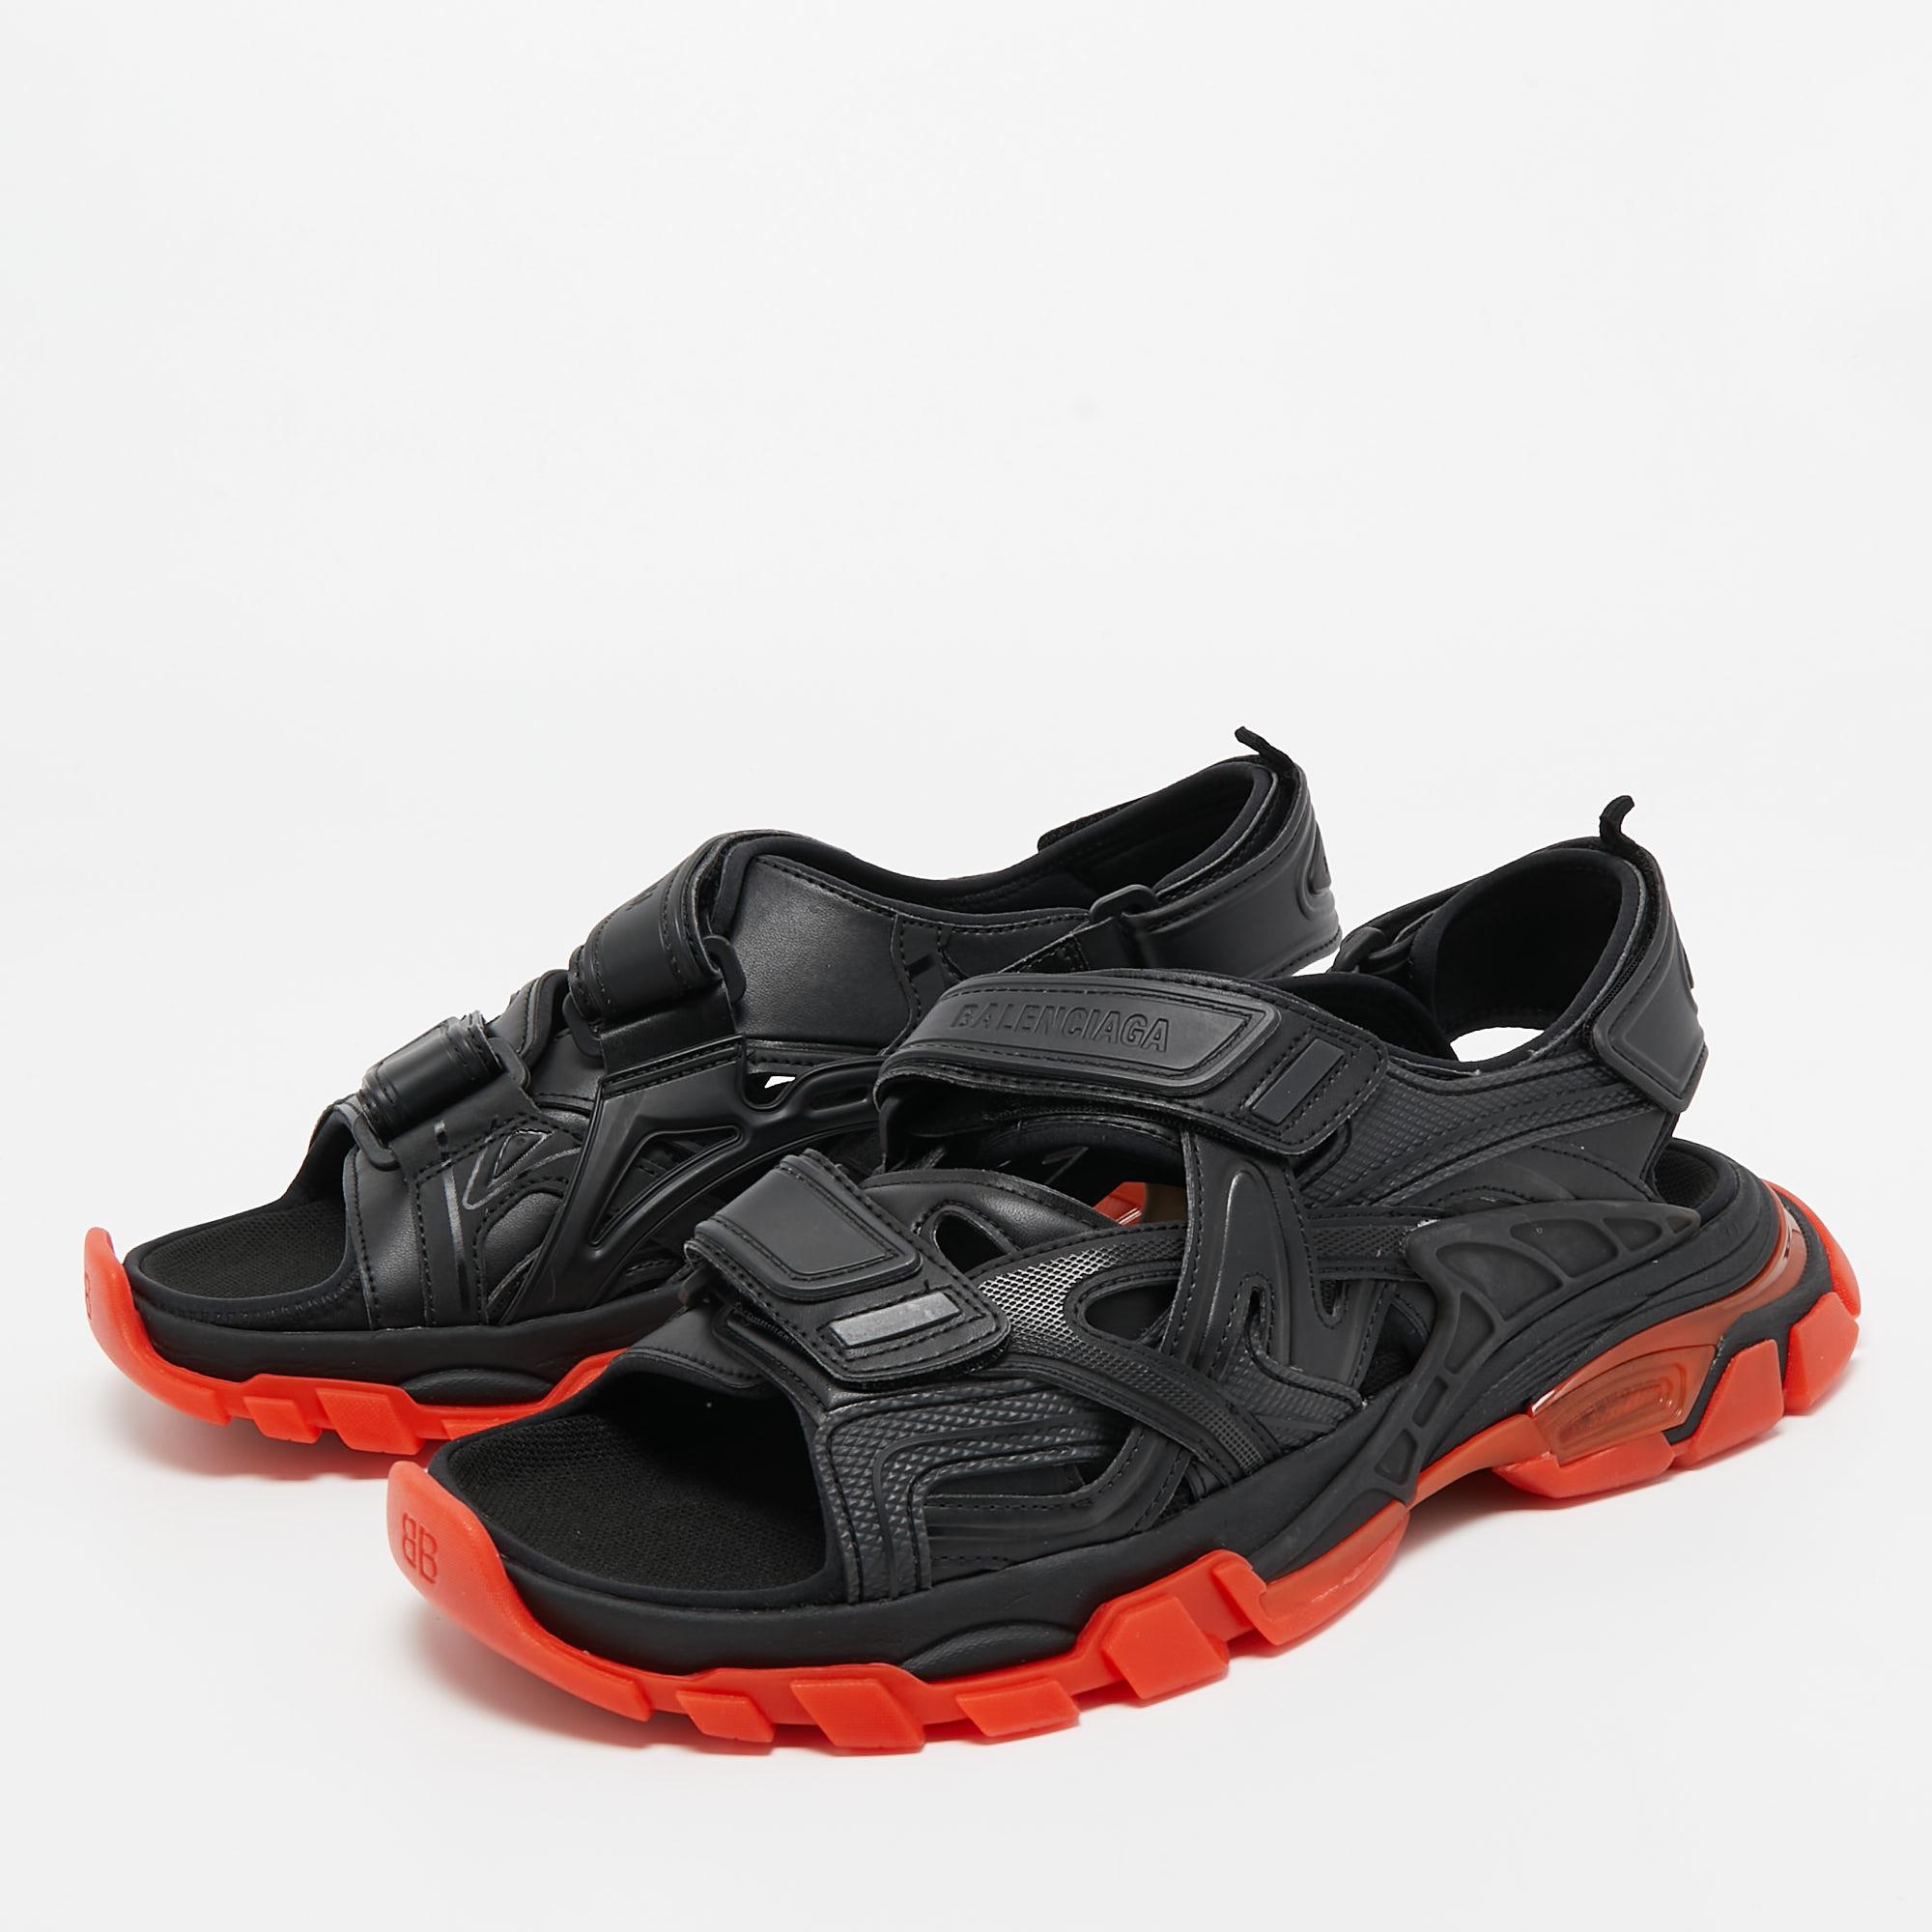 Men's Balenciaga Black Leather Velcro Track Strap Sandals Size 44